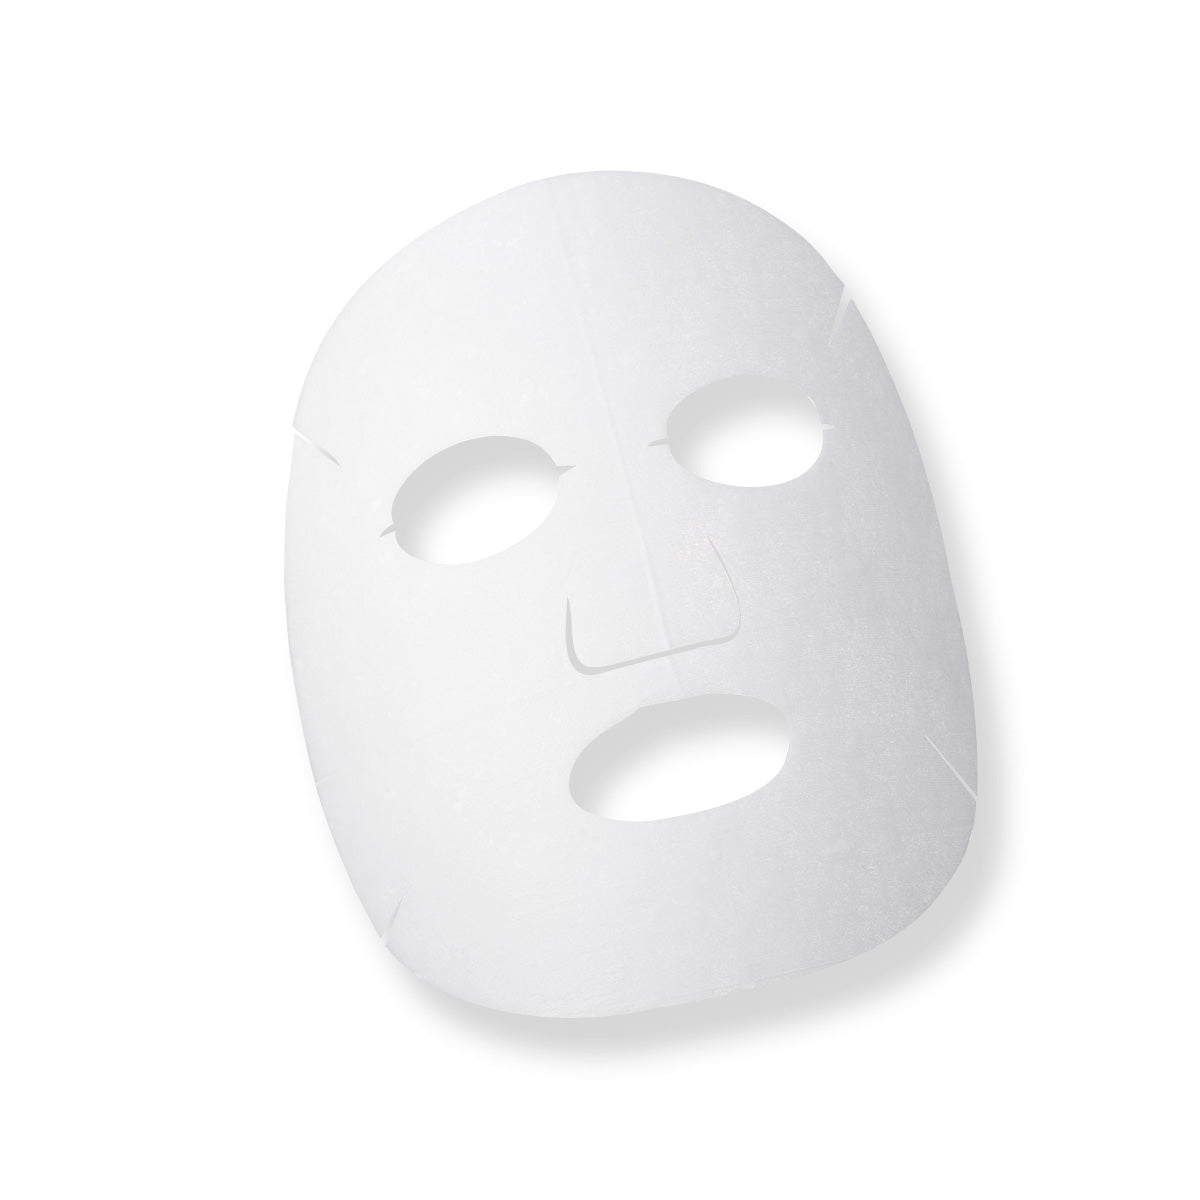 E-SPECIAL Beauty Mask <Beauty Cell Technology Mask> [20 mL x 11 sheets]×3